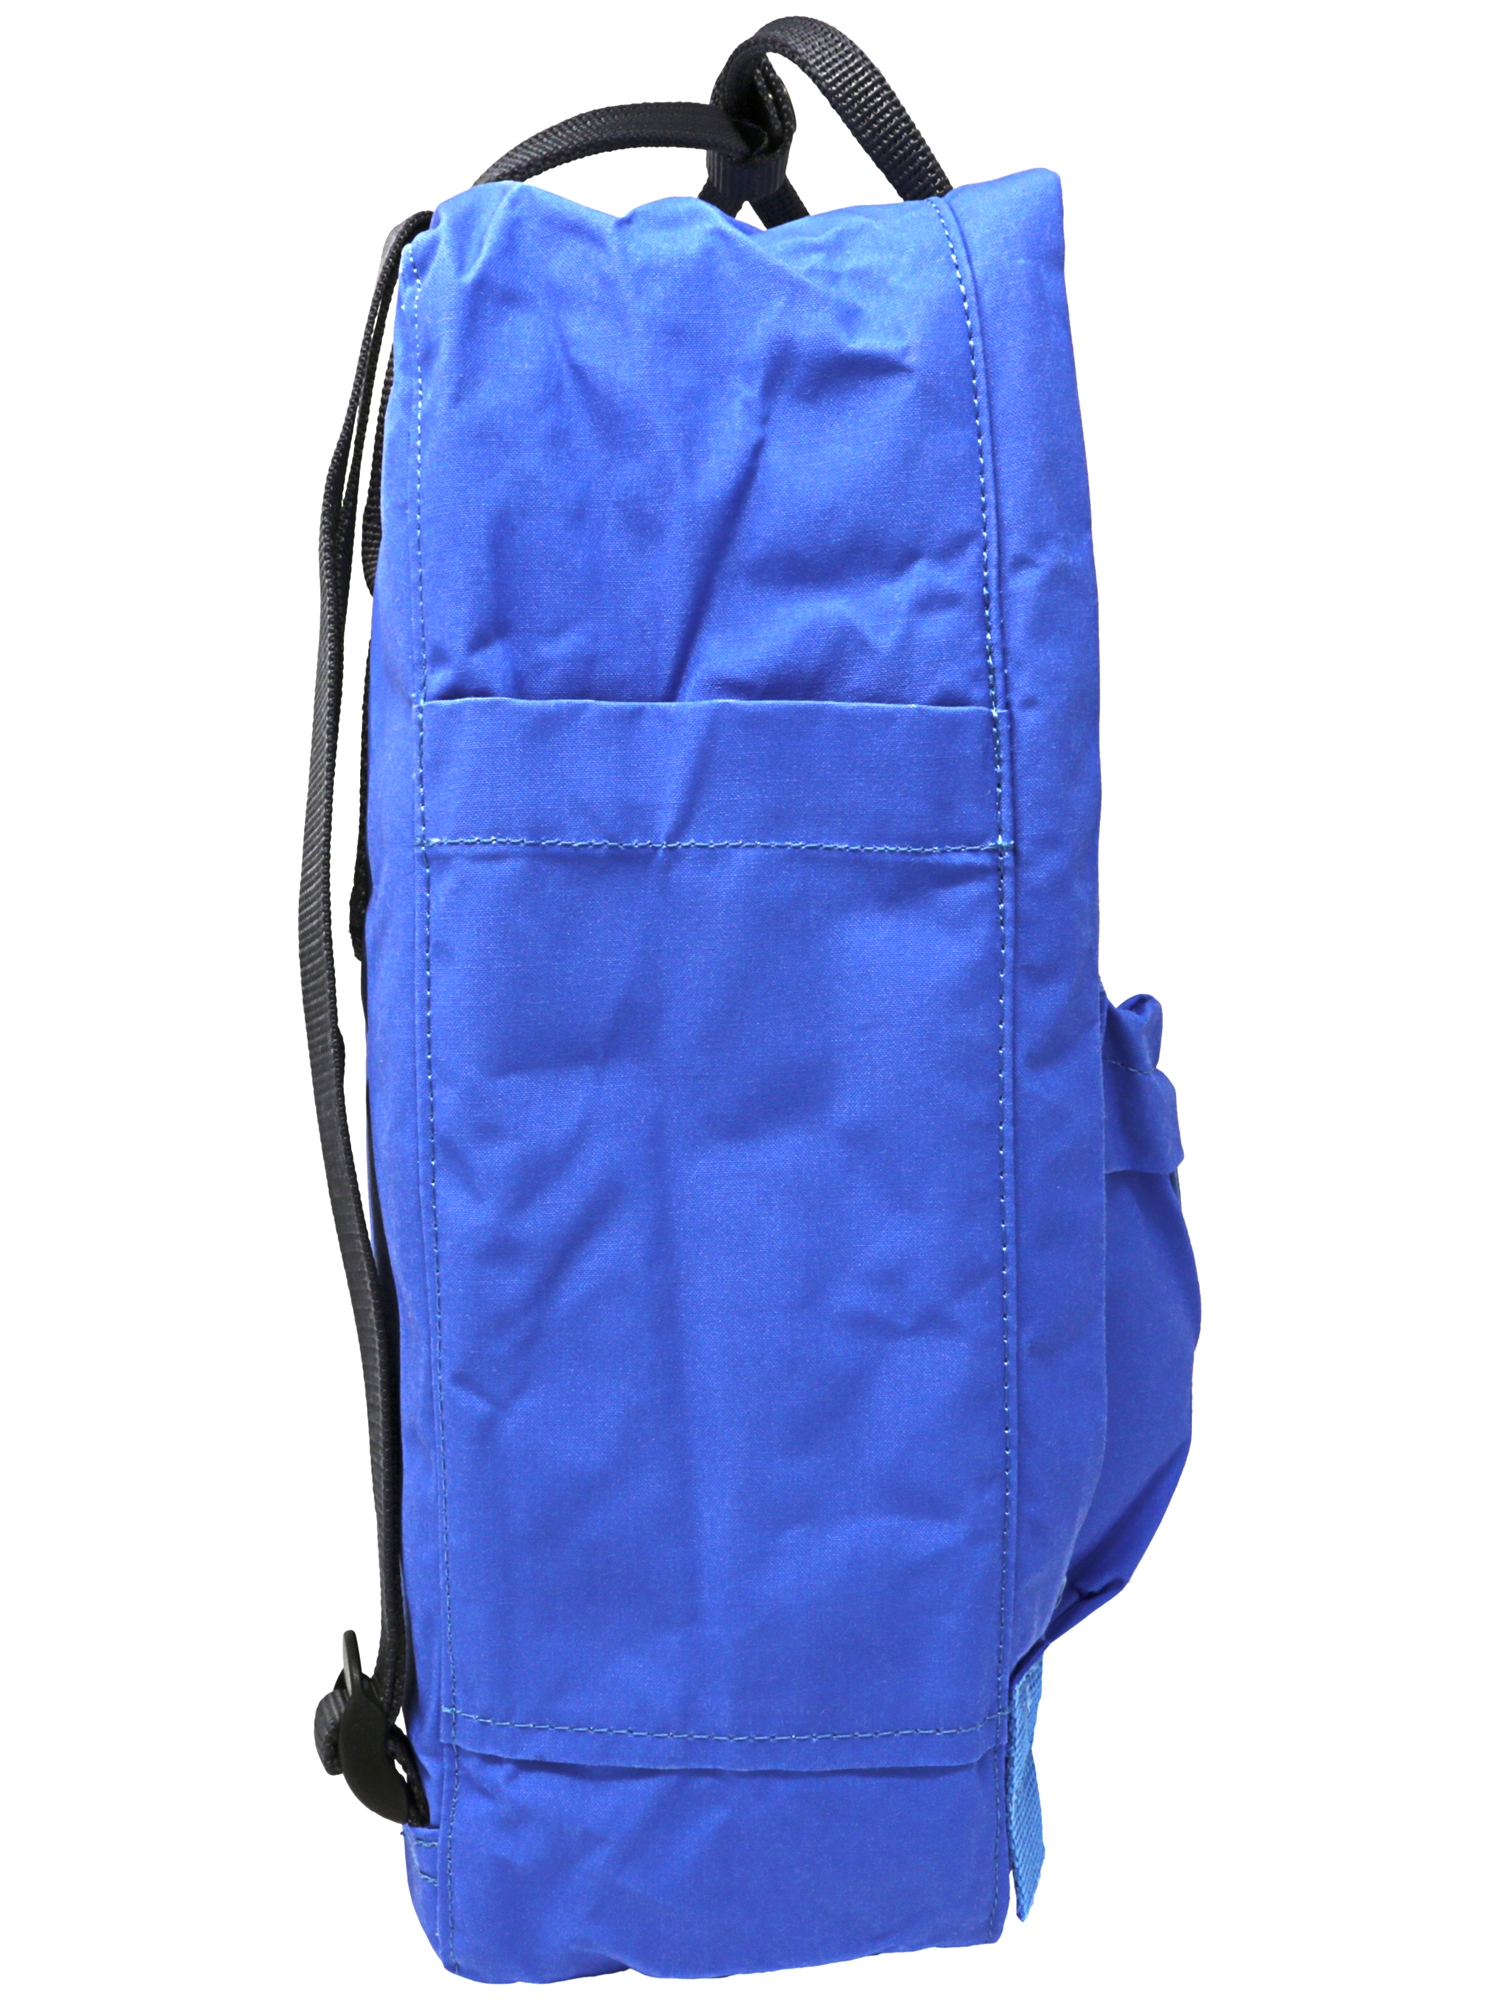 Fjallraven - Kanken Classic Backpack for Everyday - UN Blue/Navy - image 2 of 4